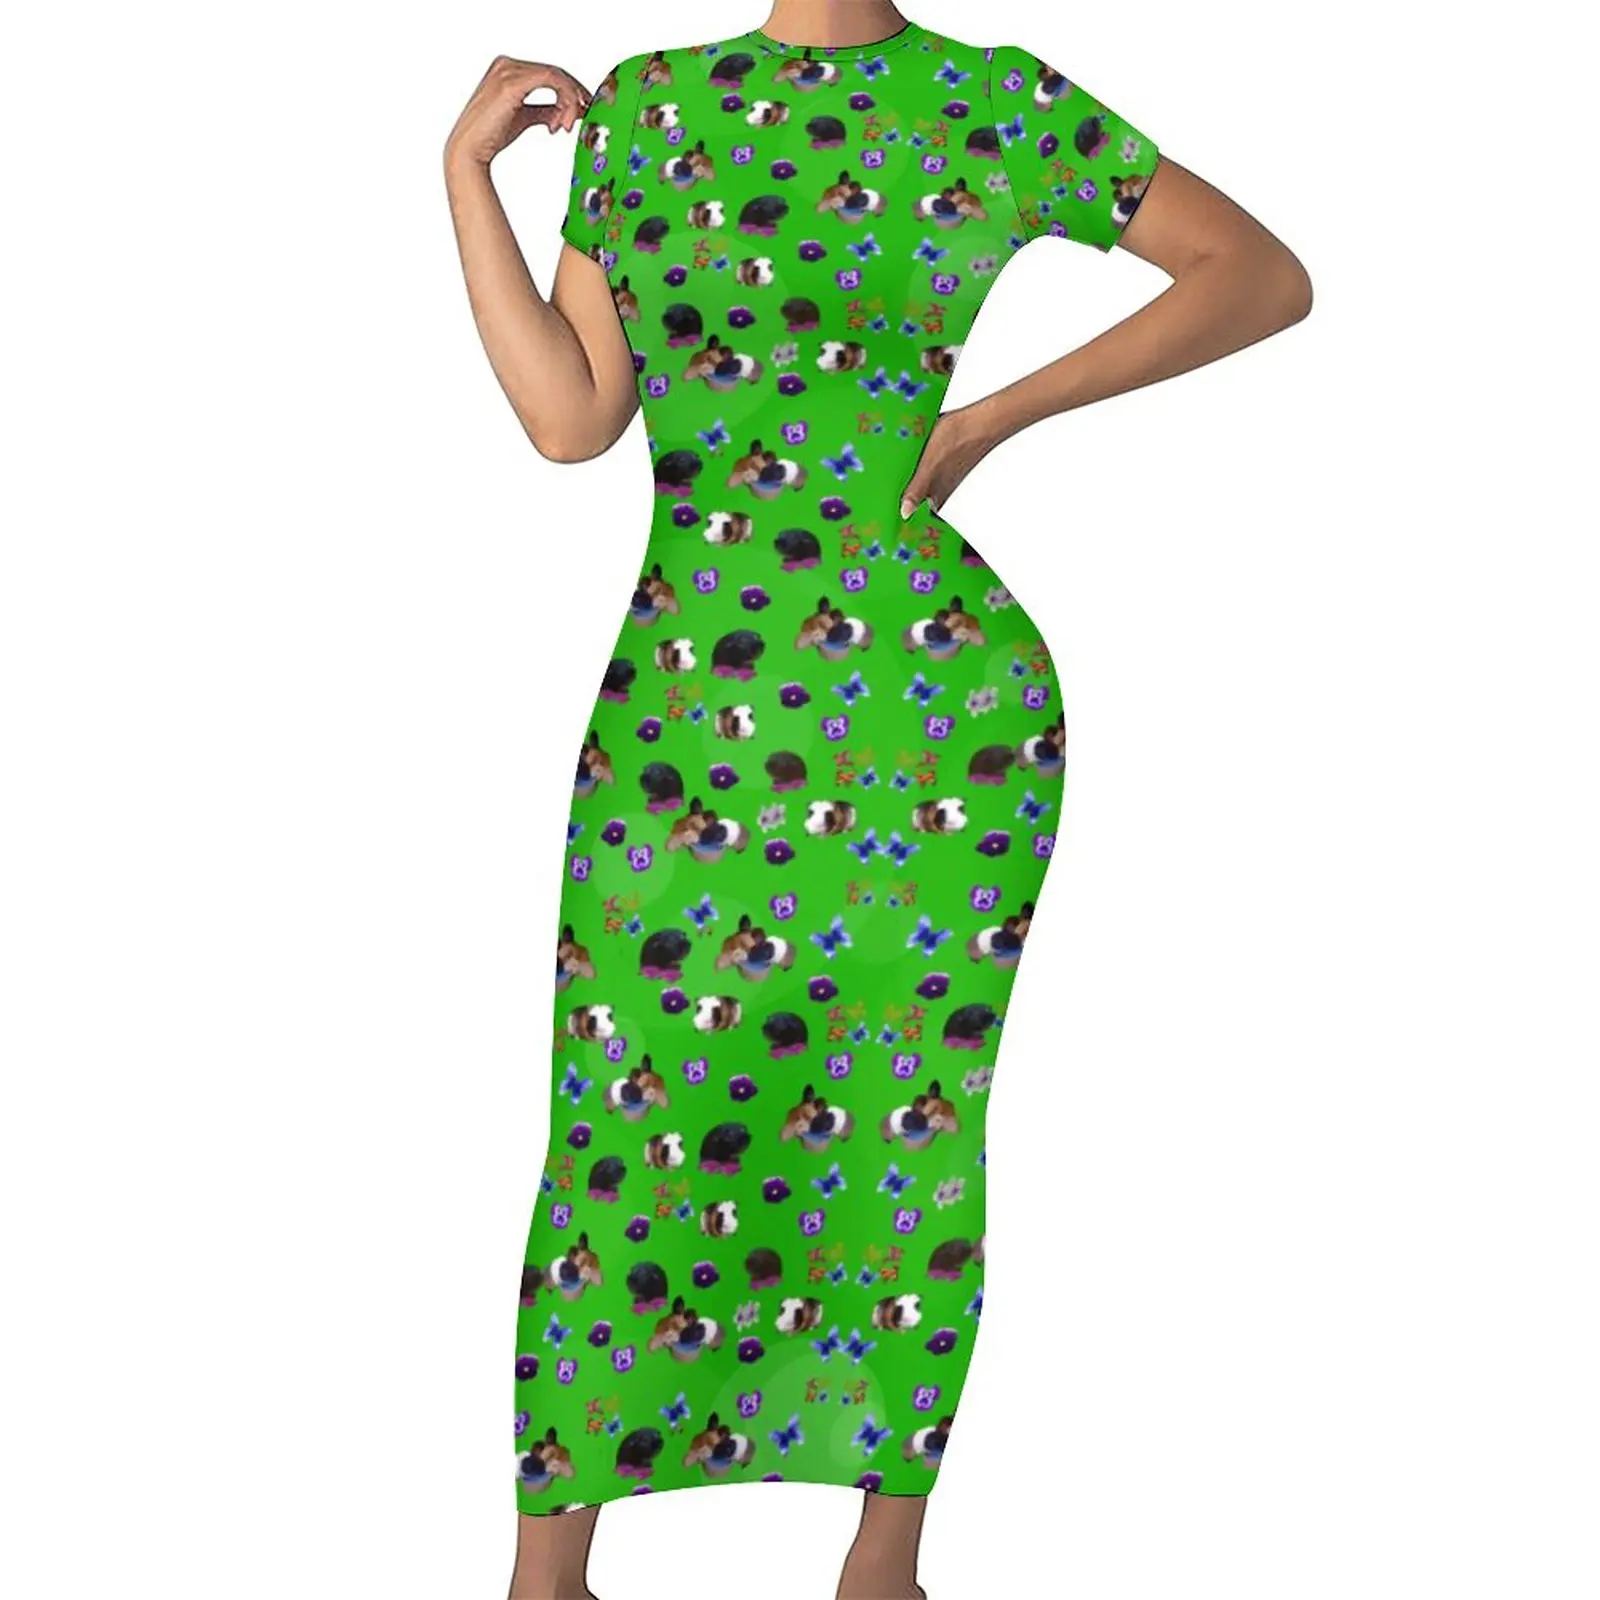 Guinea Pig Dress Short Sleeve Pansies And Butterflies Retro Maxi Dresses Summer Street Wear Graphic Bodycon Dress Big Size